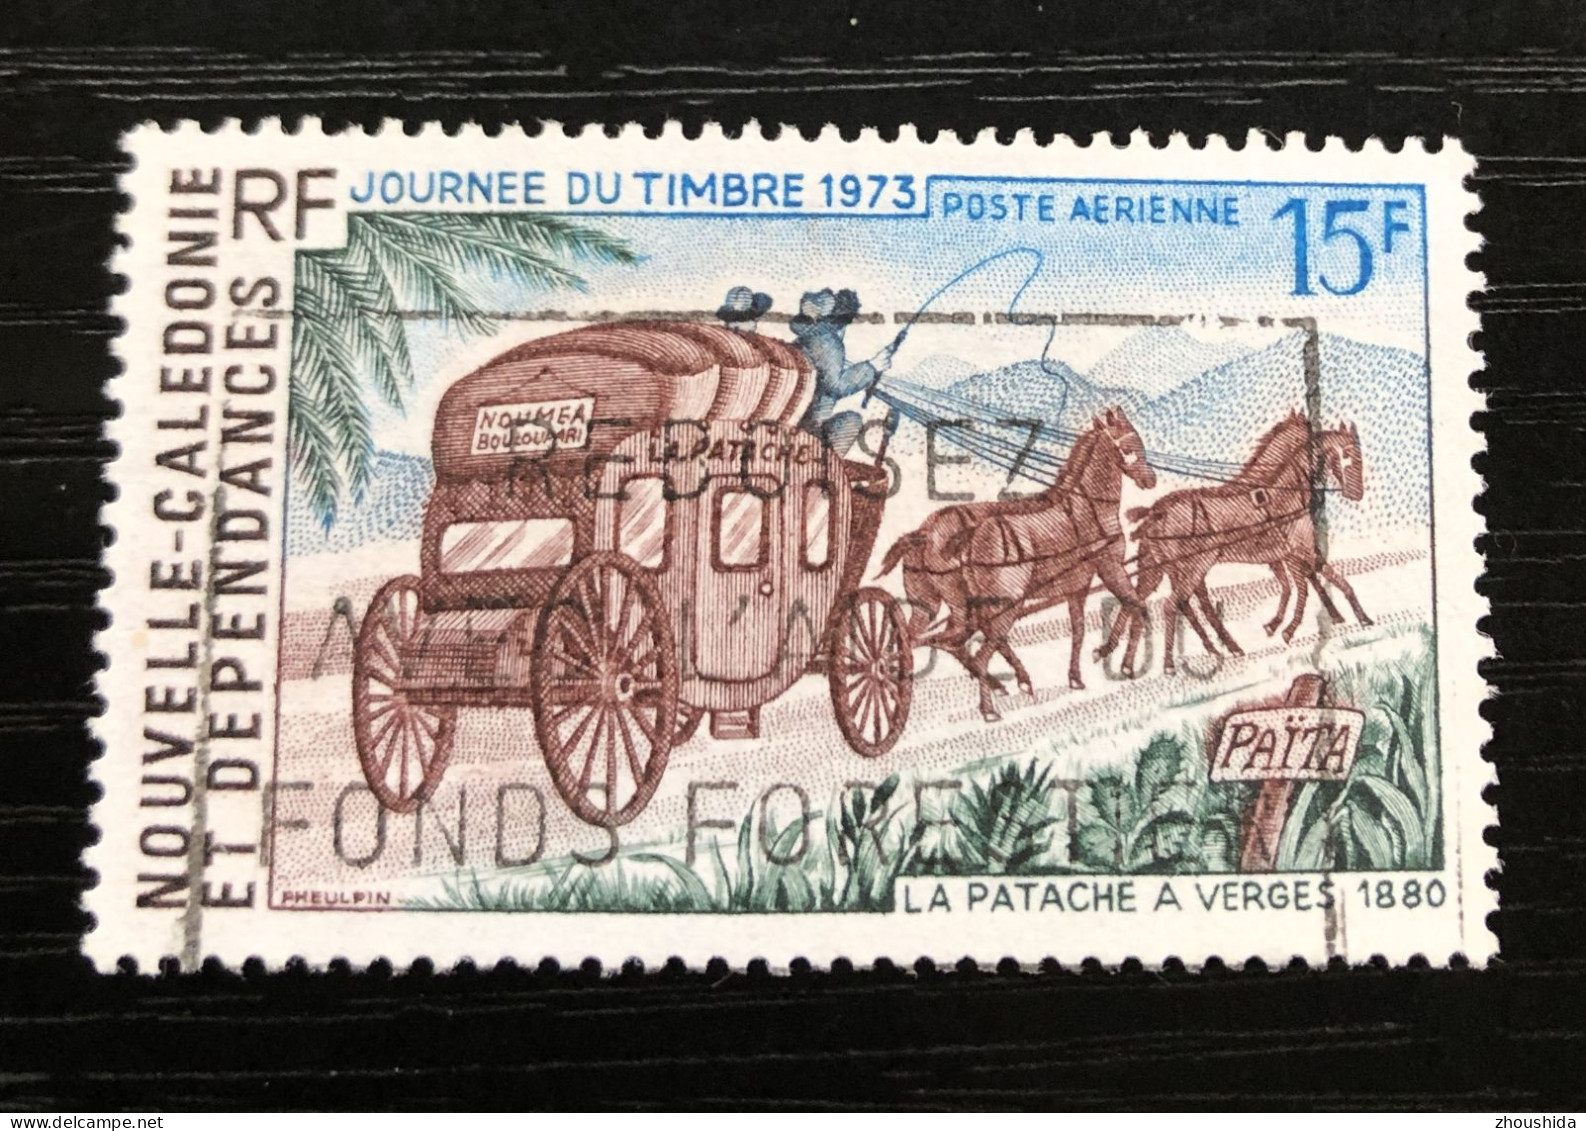 New Caledonia 1973 Postal Day Air Stamp 15F Fine Used - Usati